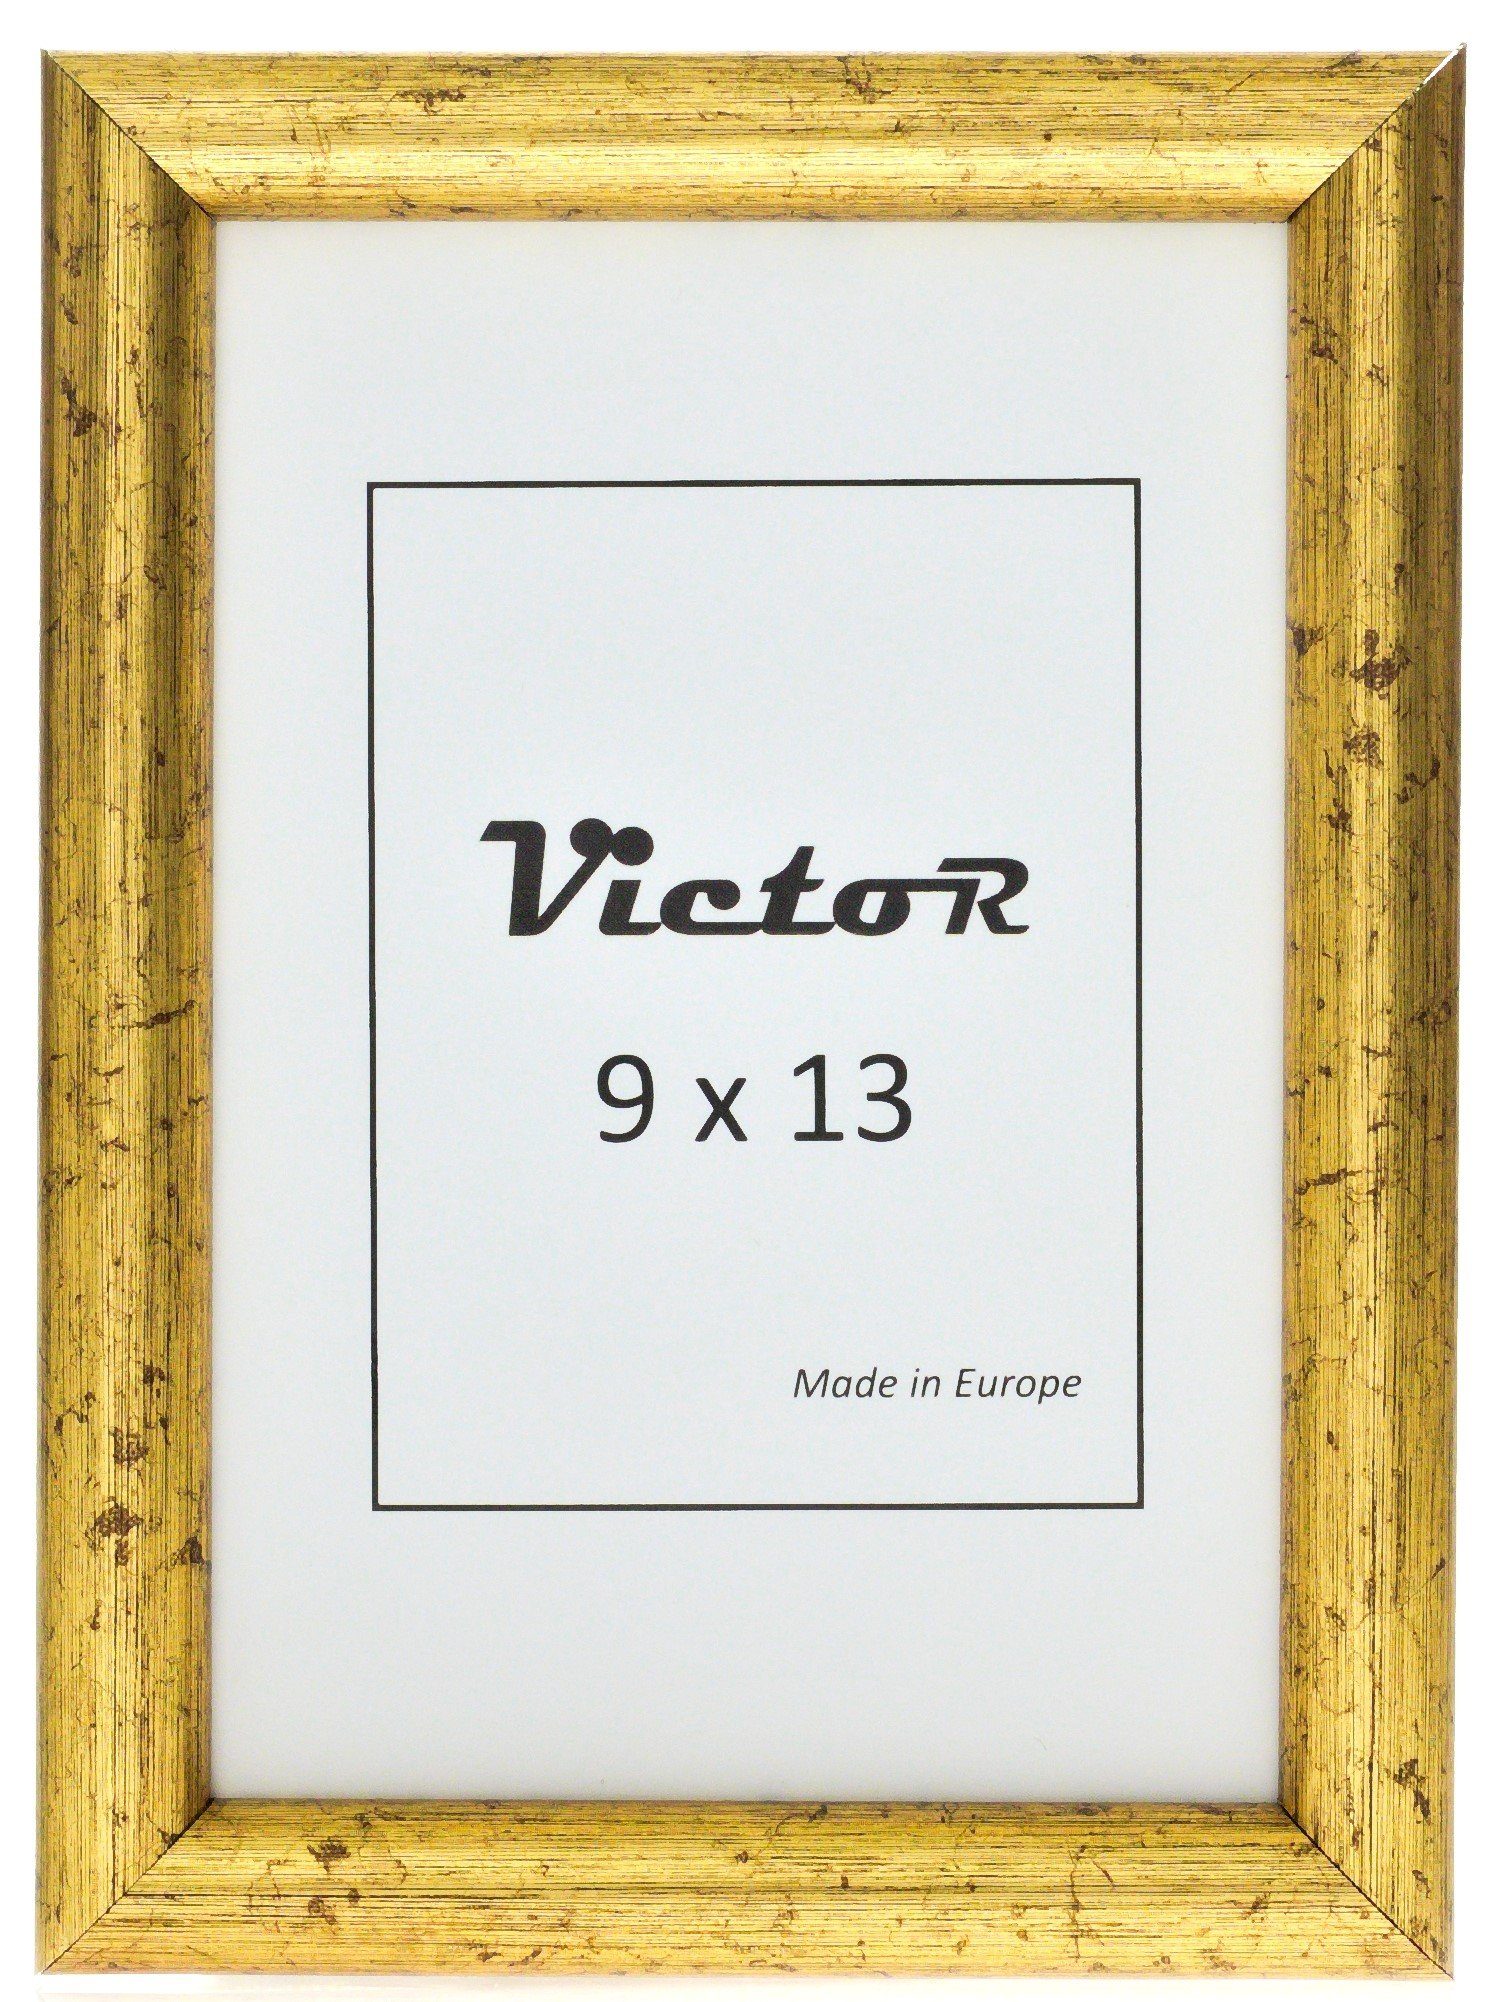 cm, Rahmen 14x17mm, in David, Leiste: 9x13 (Zenith) Victor Kunststoff Bilderrahmen gold,